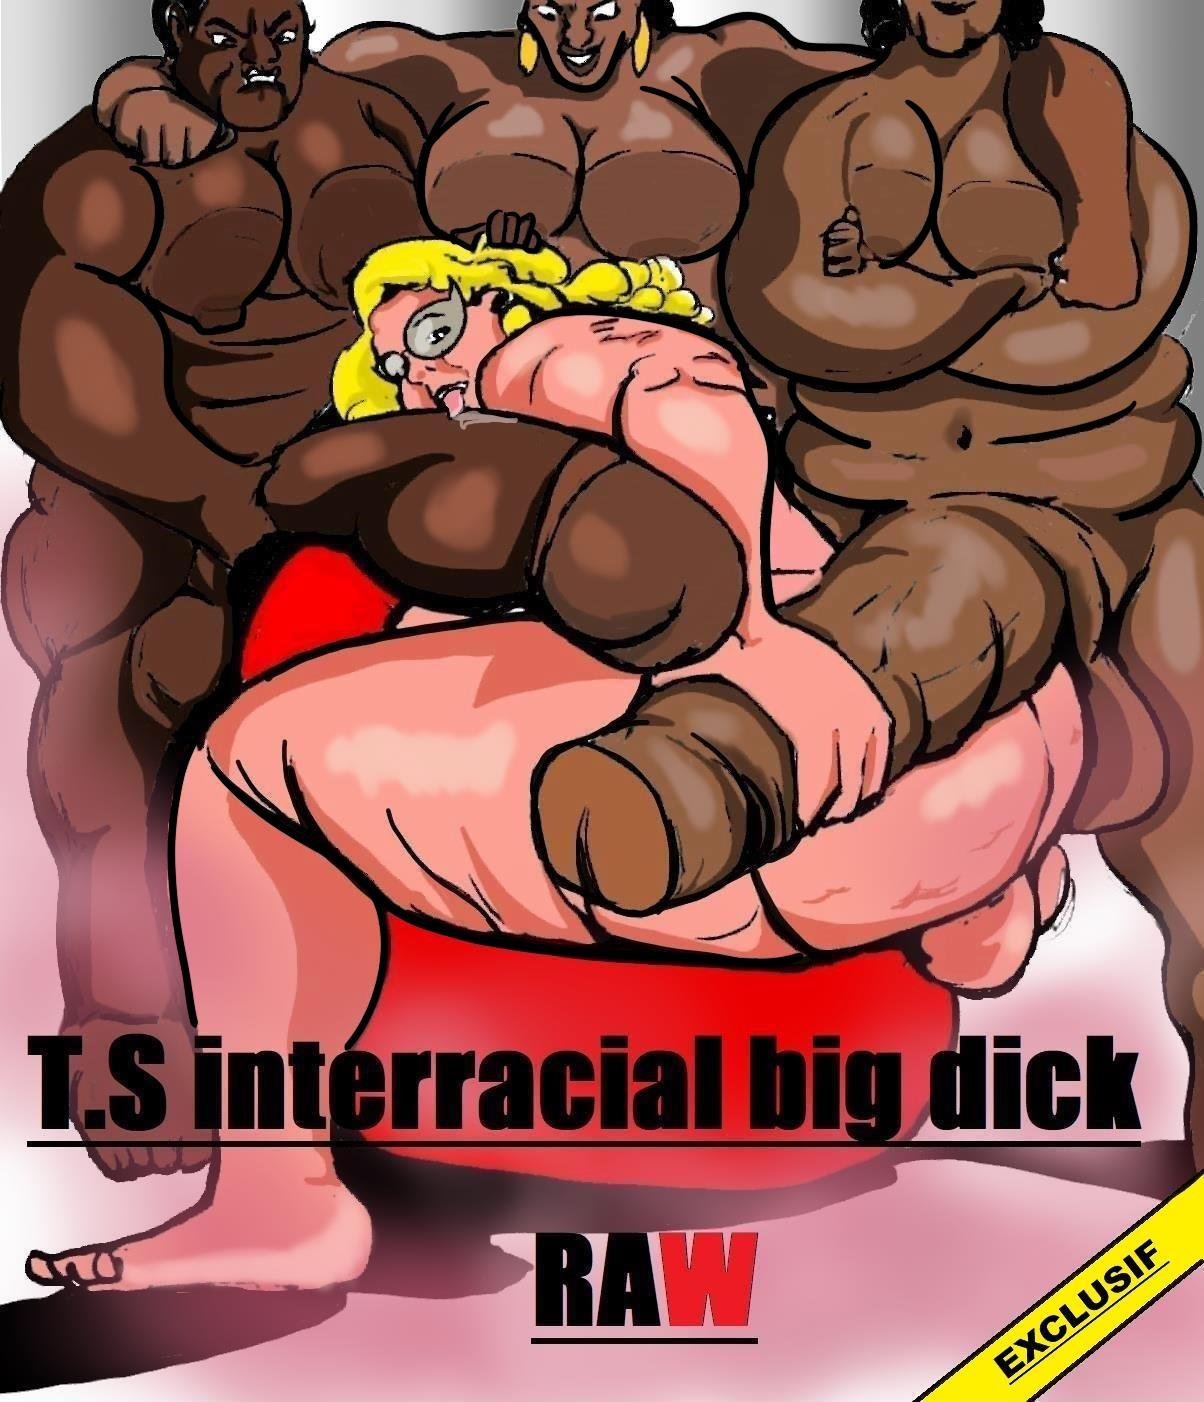 Huge Black Shemale Porn Comic - T.S Interracial big dick RAW Â» Porn comics free online